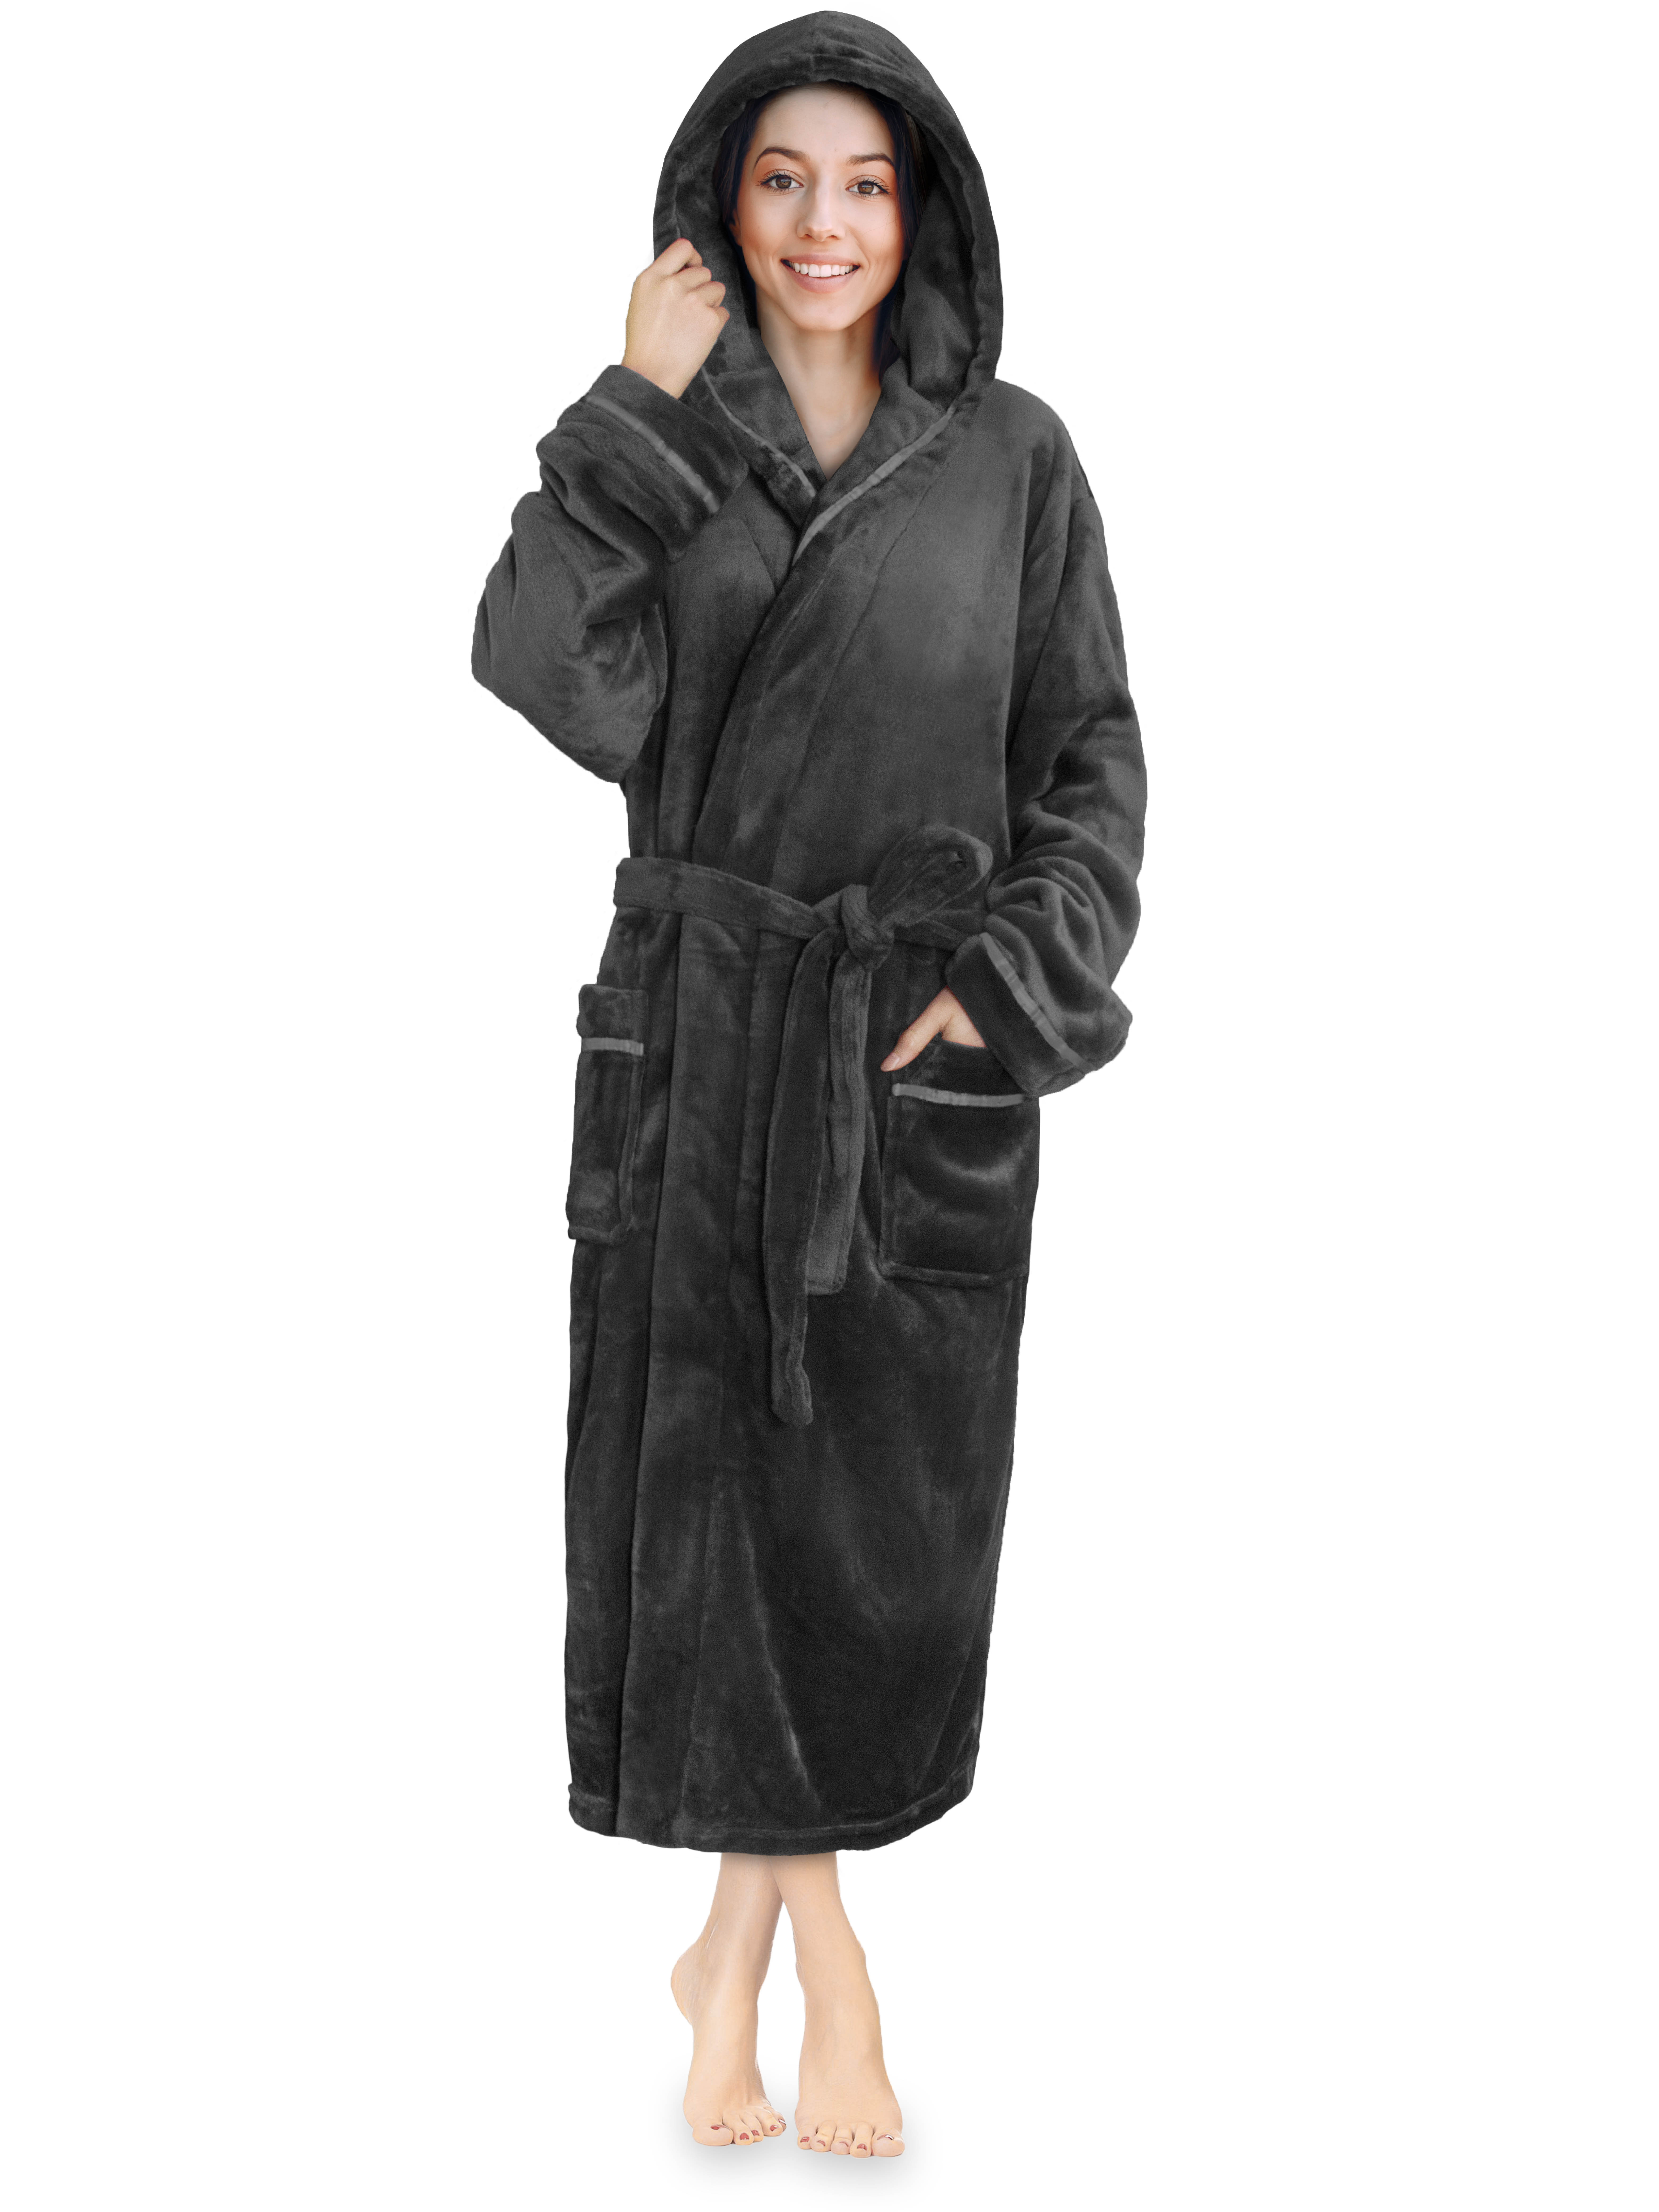 HOLOVE Women Hooded Fleece Robes Warm Plush Terry Cloth Bathrobe Spa Nightwear 